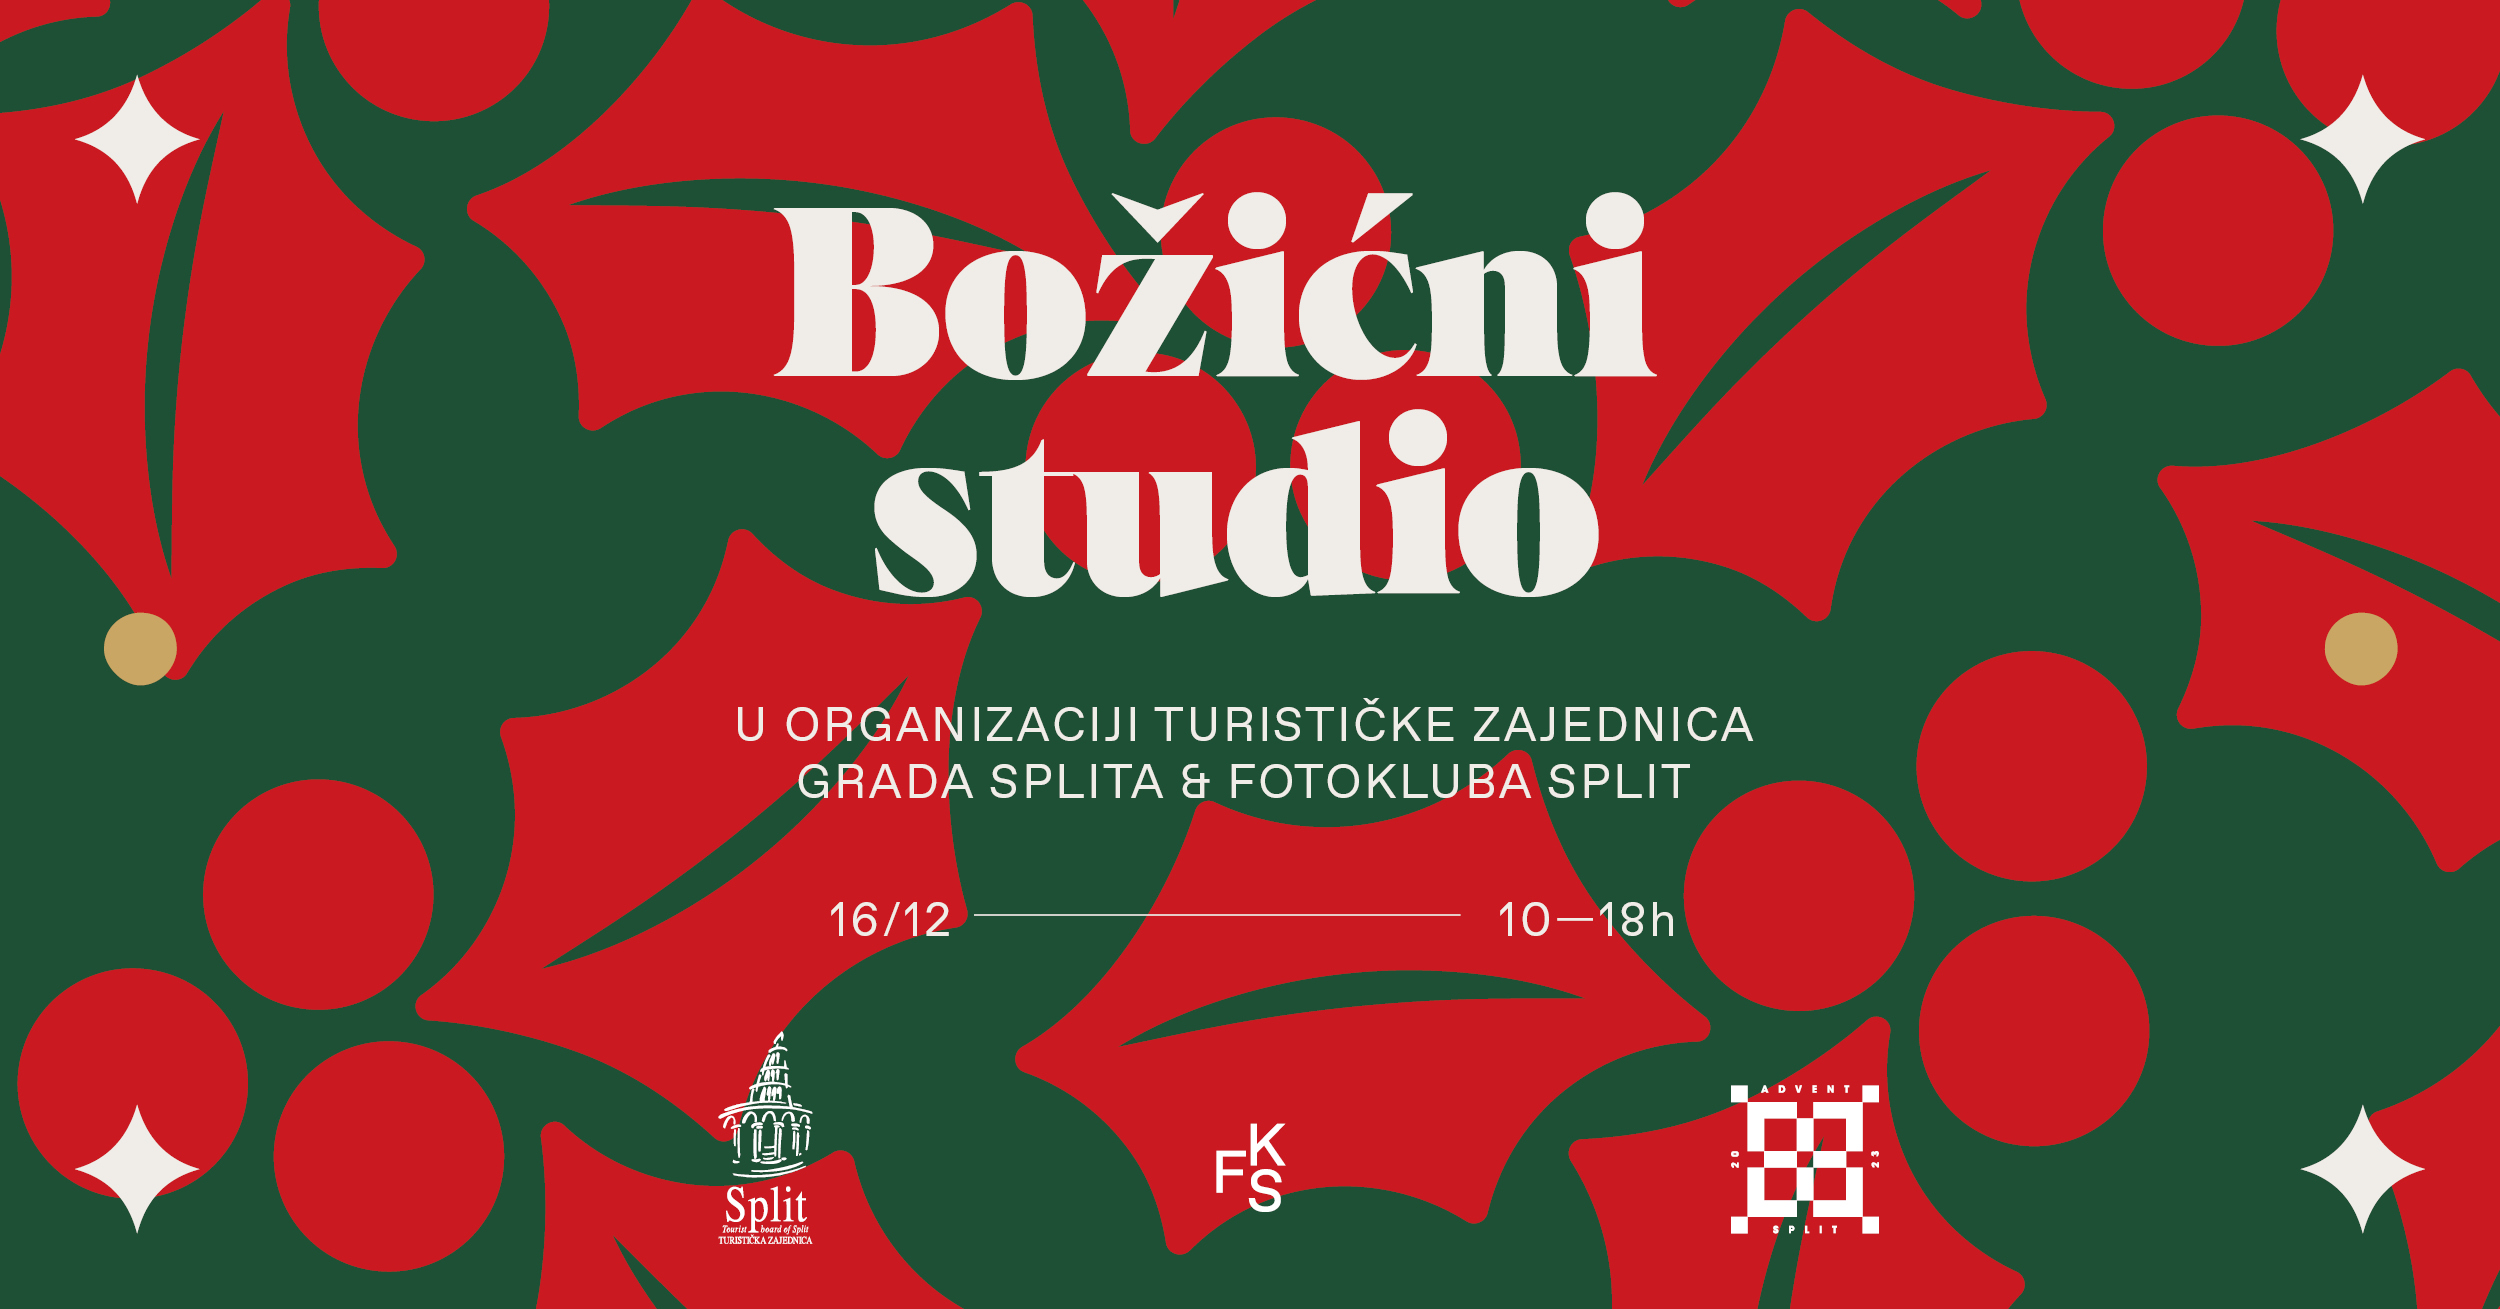 Ove subote Fotoklub Split pretvara se u Božićni studio!